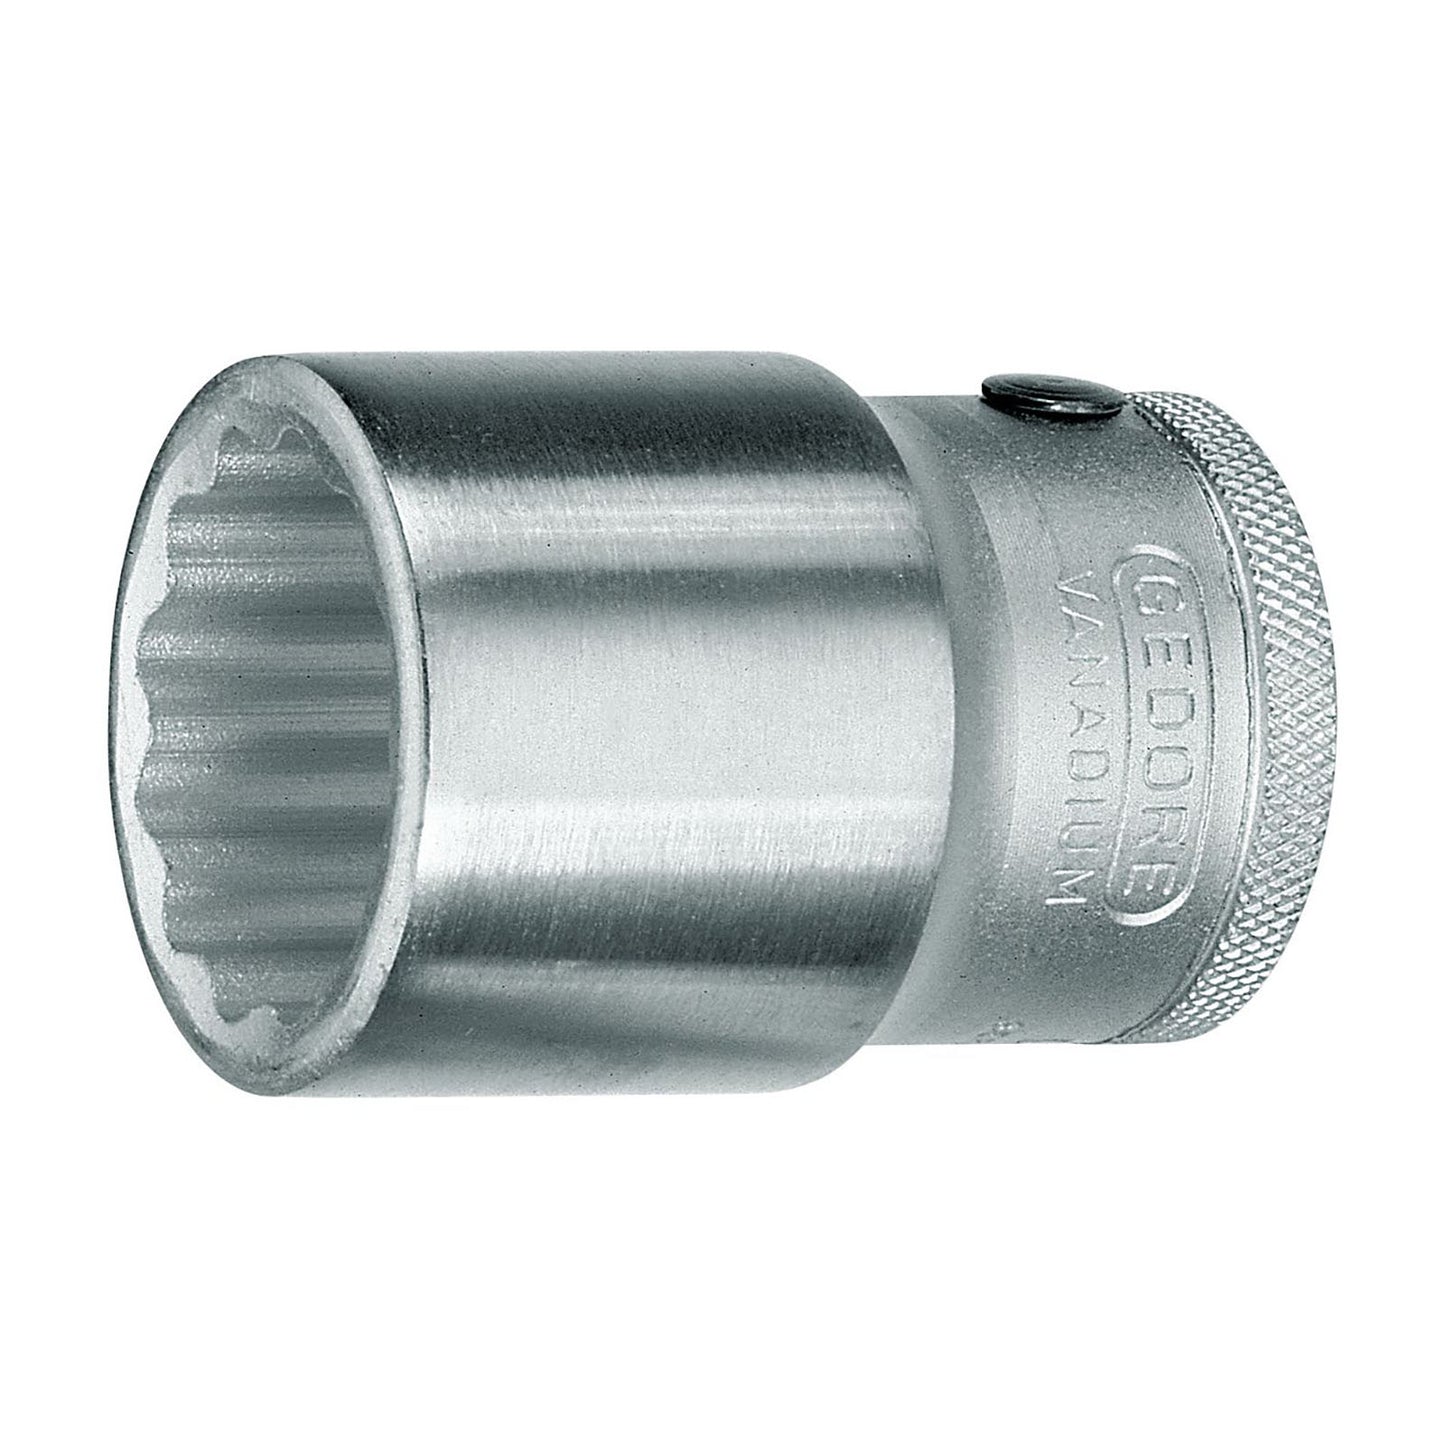 GEDORE D 32 38 - Unit Drive Socket 3/4", 38 mm (6272910)